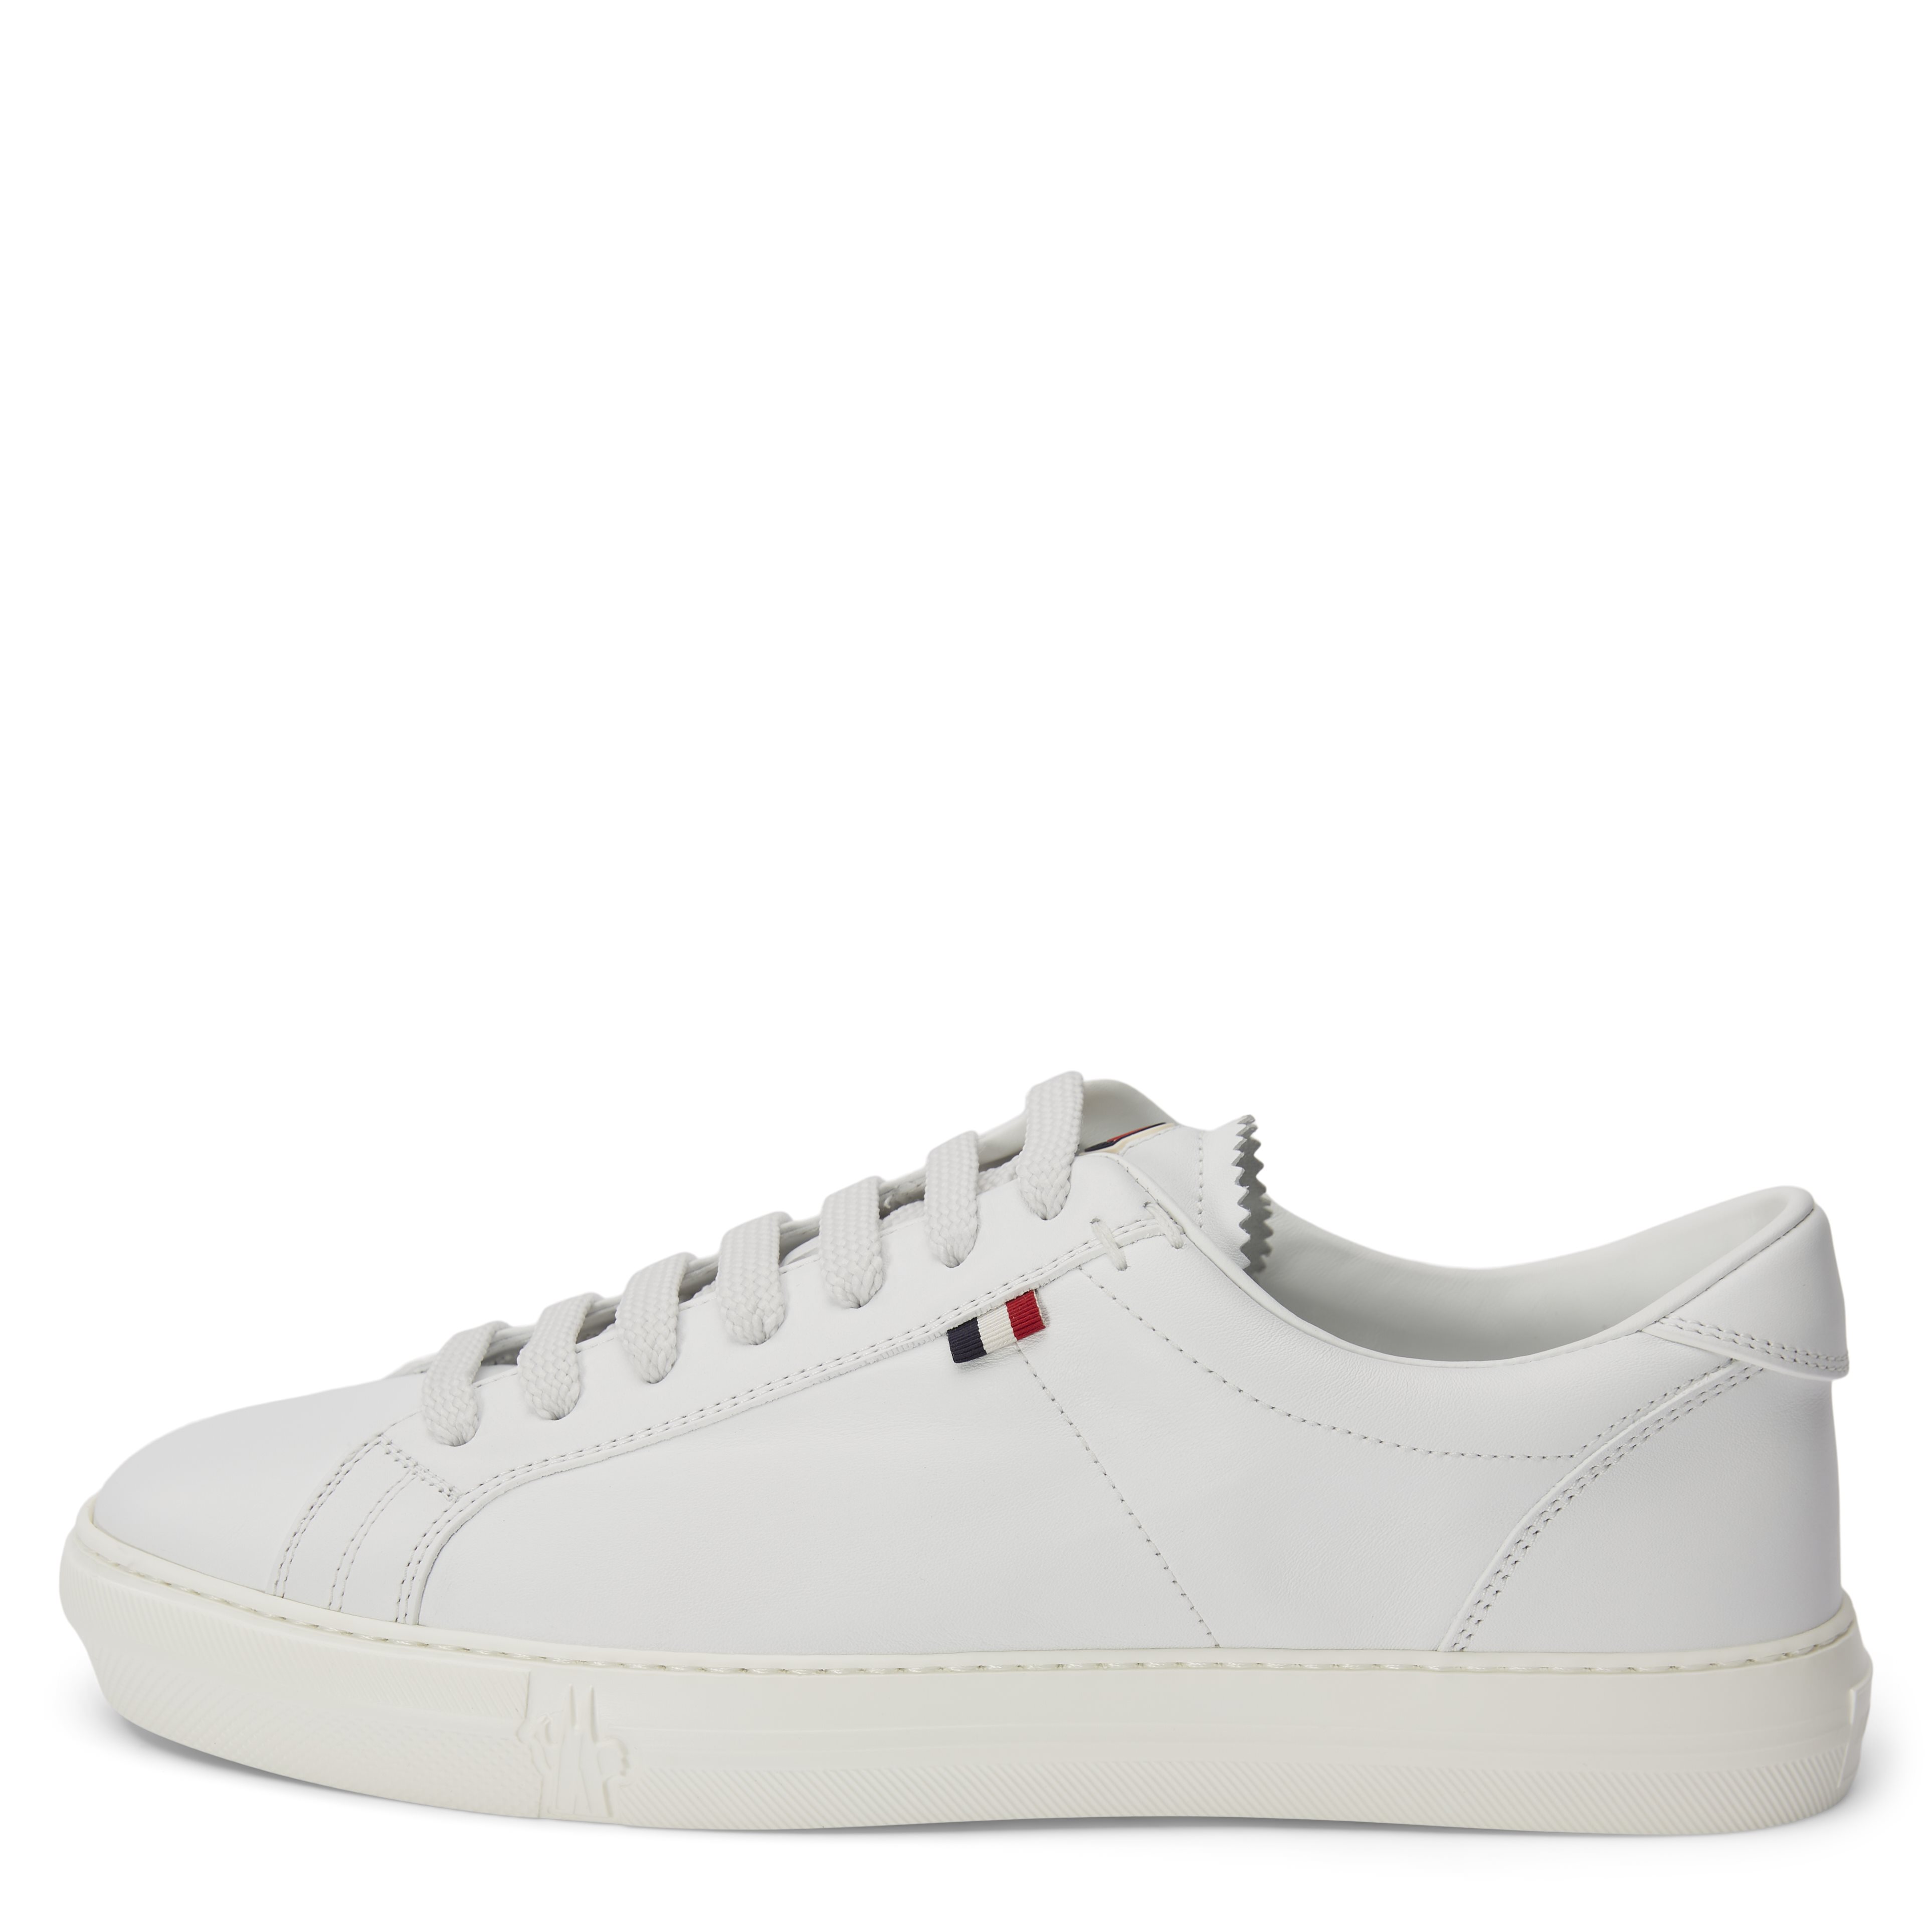 New Monaco Sneakers - Shoes - White